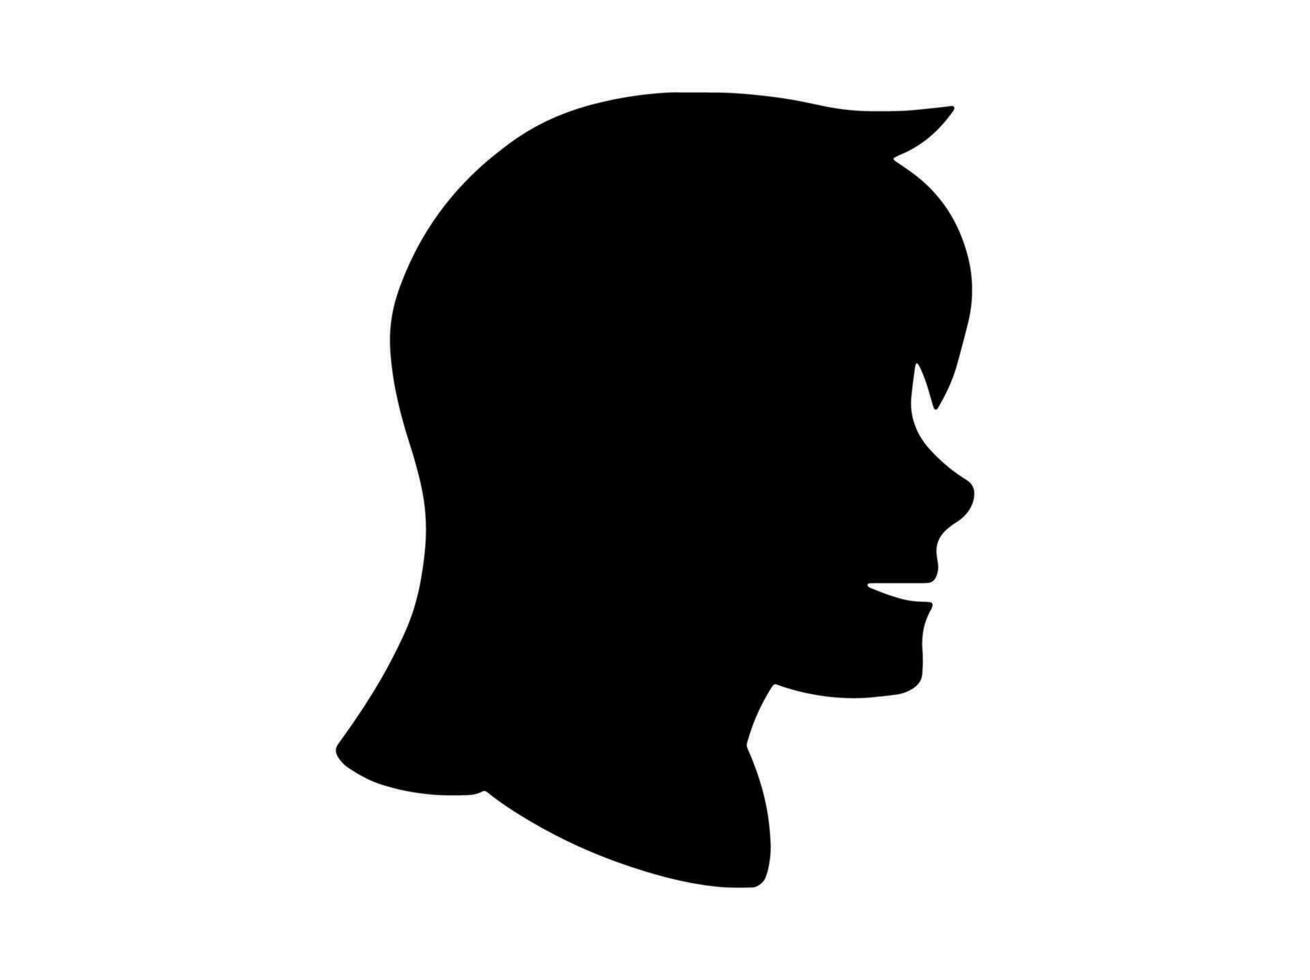 Benutzerbild Profil Bild Silhouette Illustration vektor